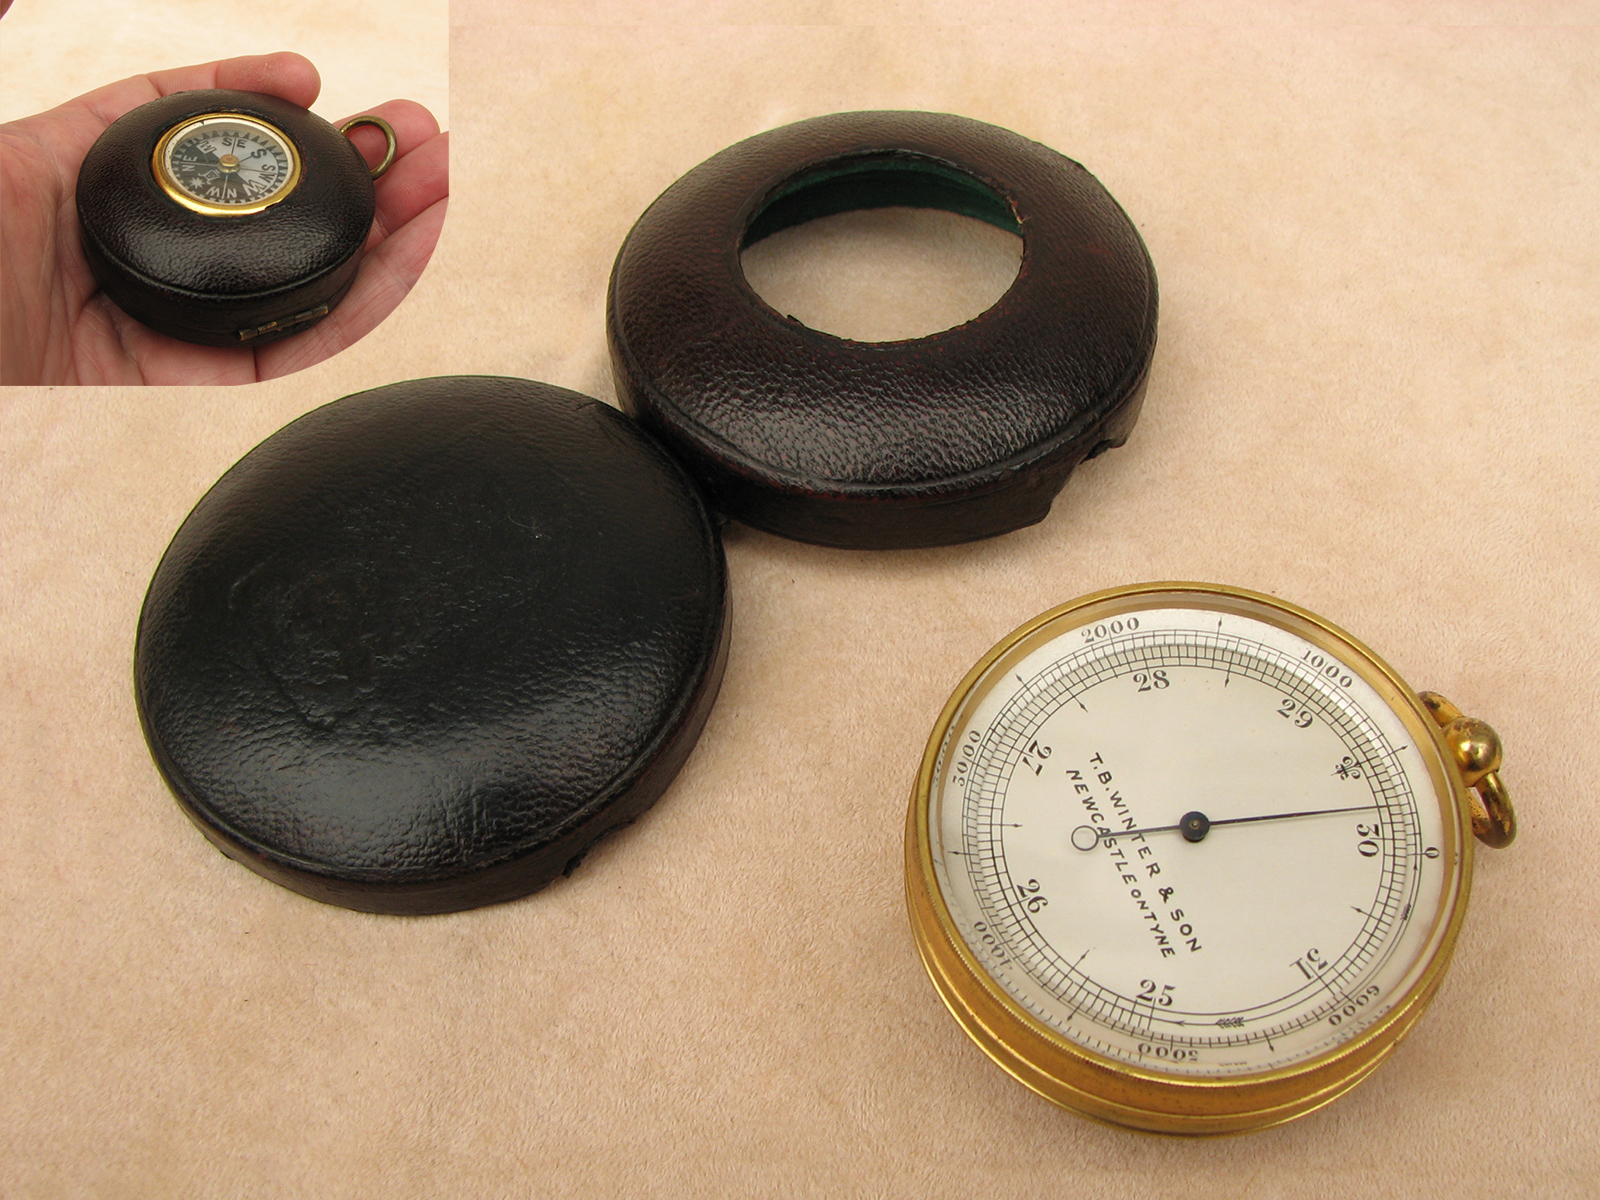 T.B. Winter & Son Victorian pocket barometer and compass compendium